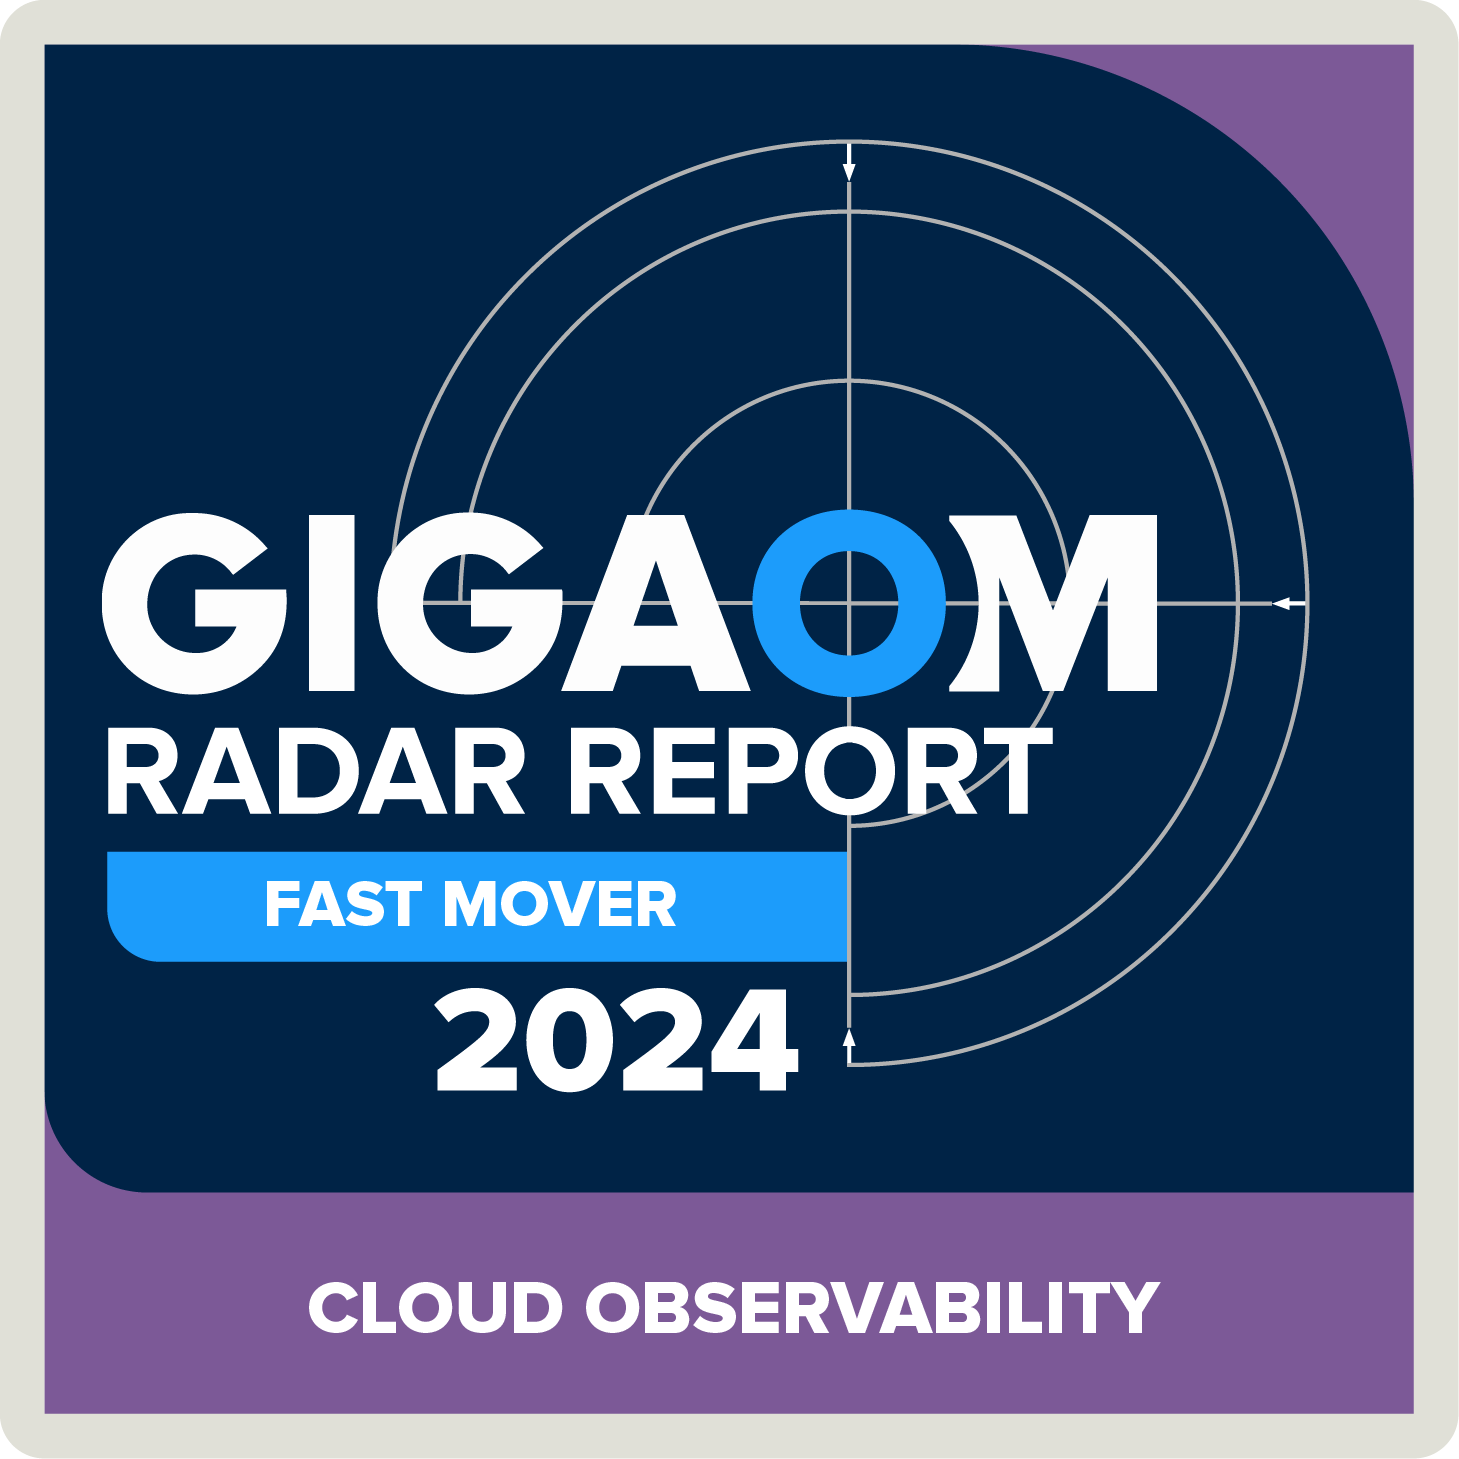 970b1b57-gigaom-badge-2024-fast-mover